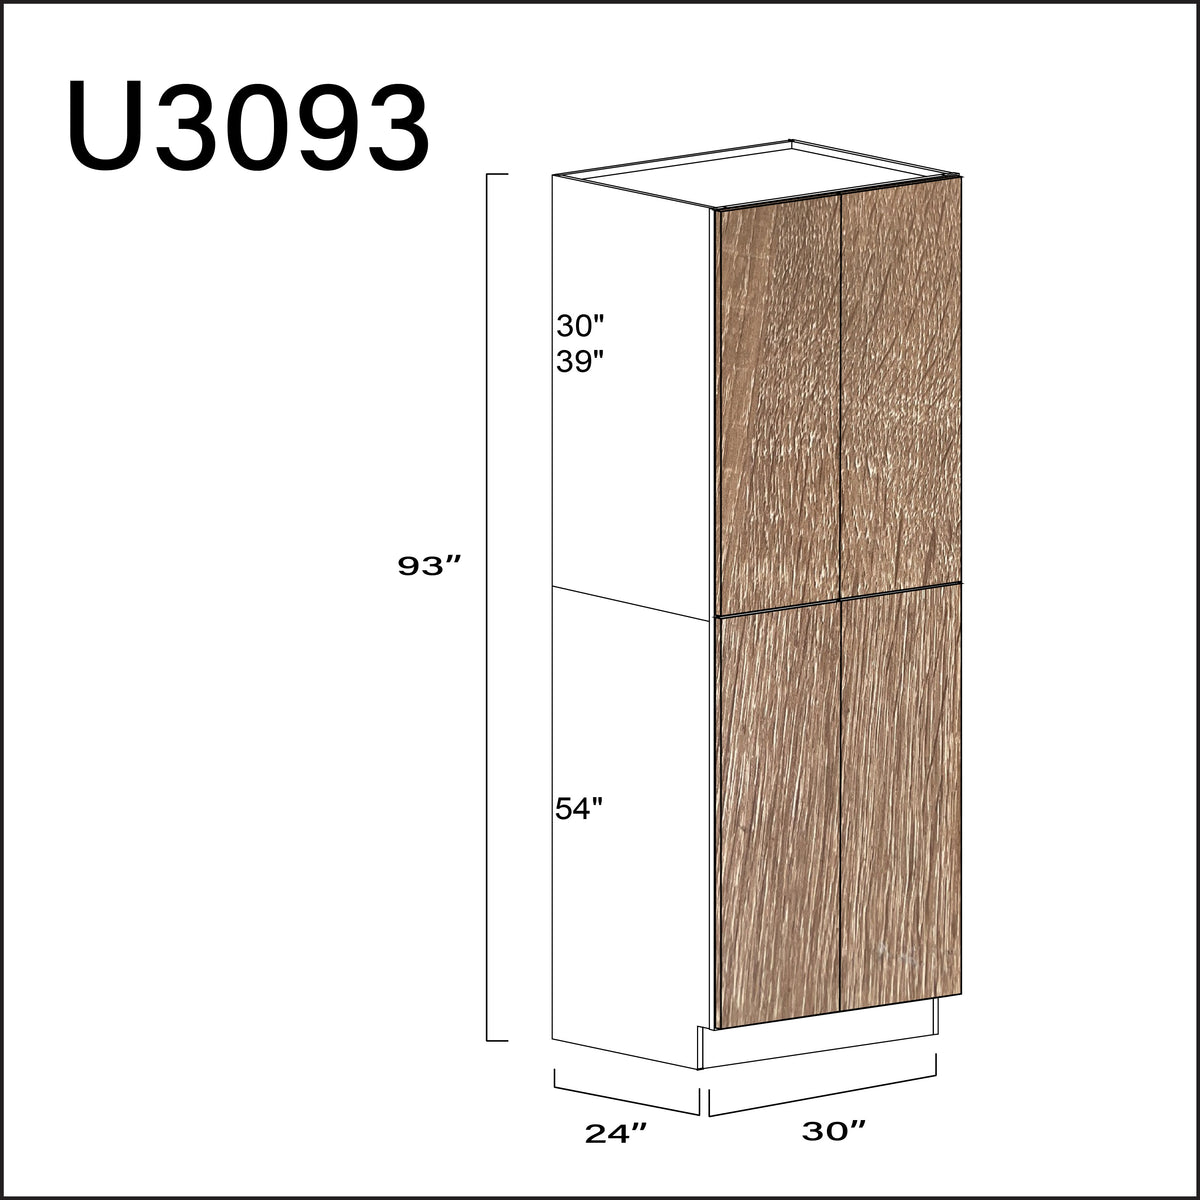 Textured Oak Frameless Double Door Pantry Cabinet - 30" W x 93" H x 24" D